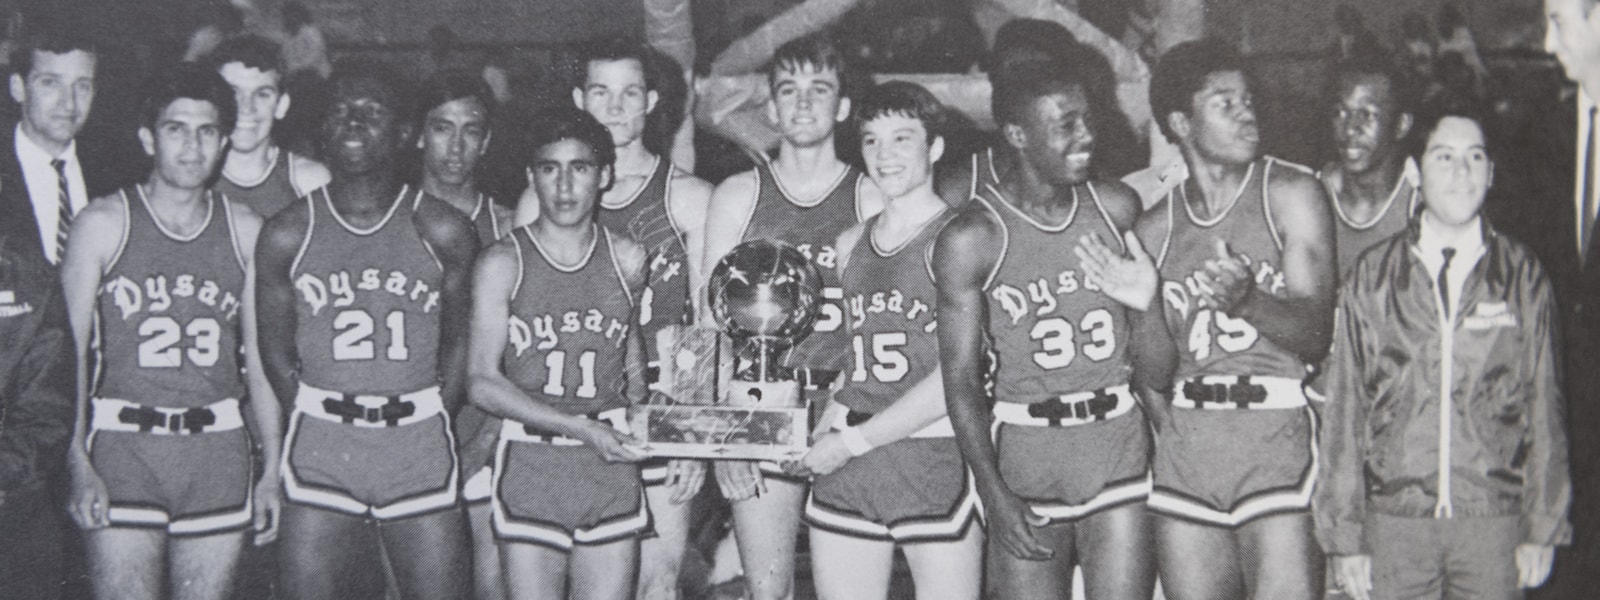 Archival photo of Dysart High School Basketball team.